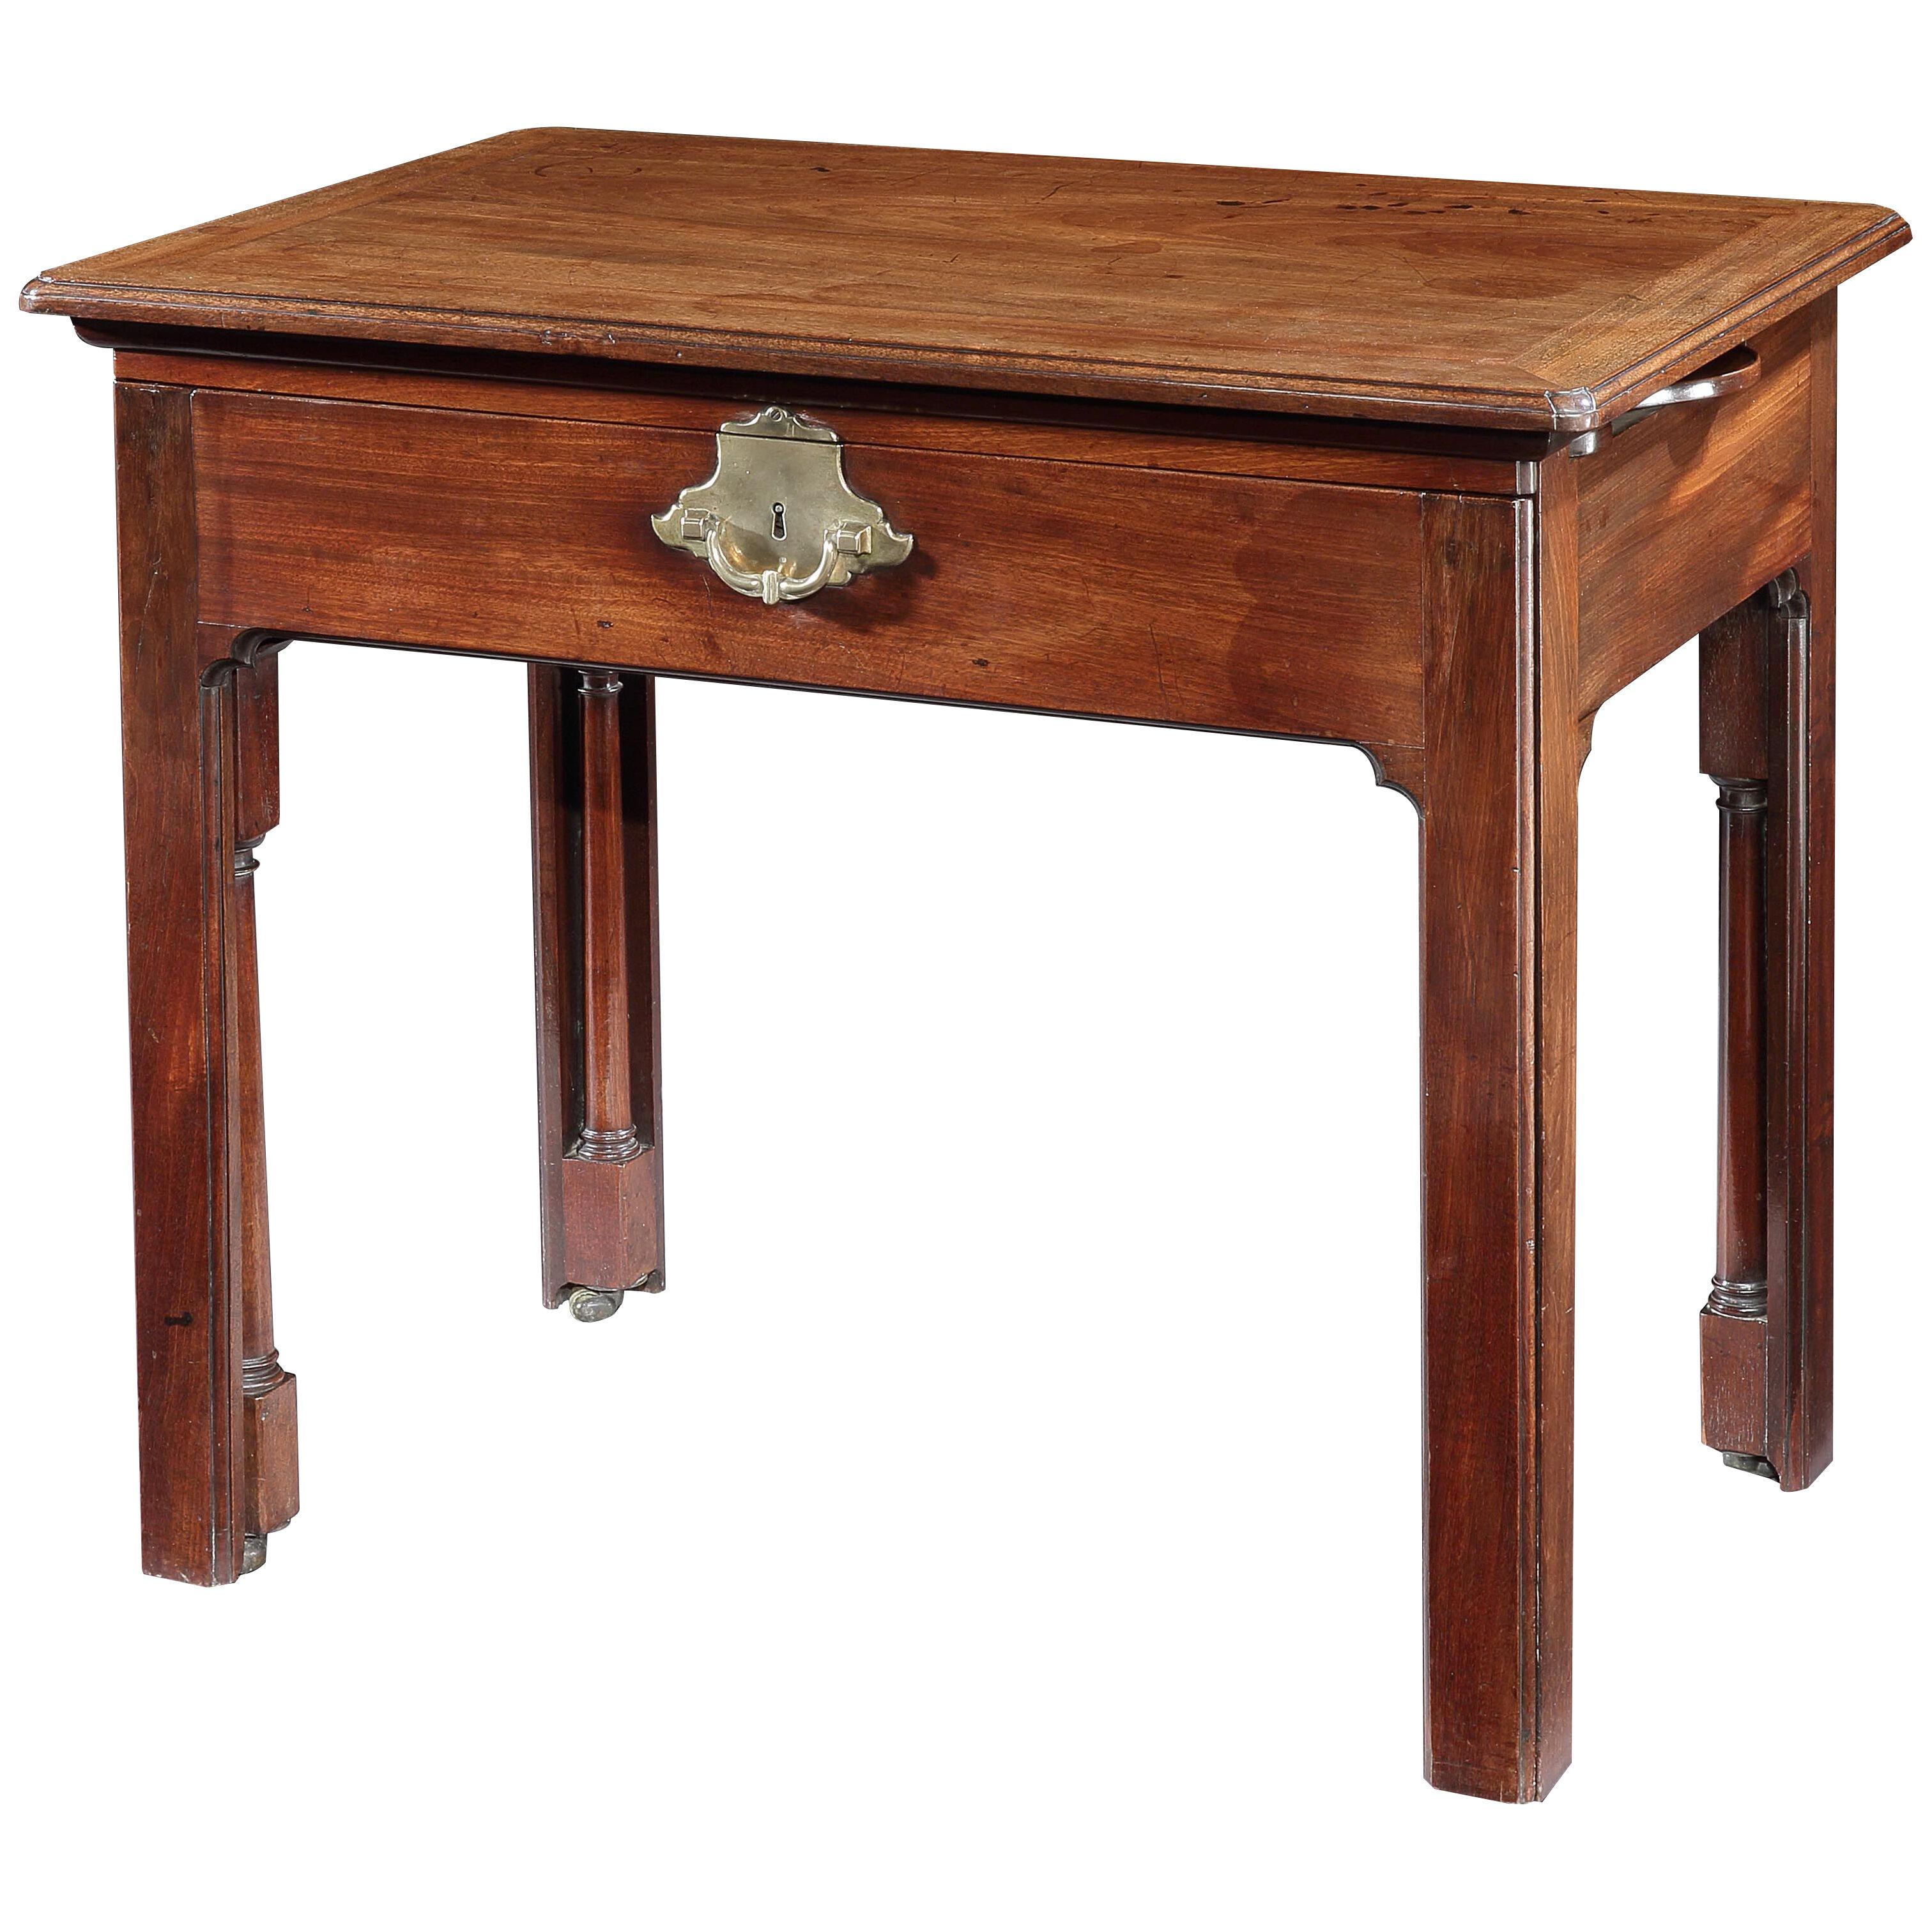 A George II mahogany architect's table